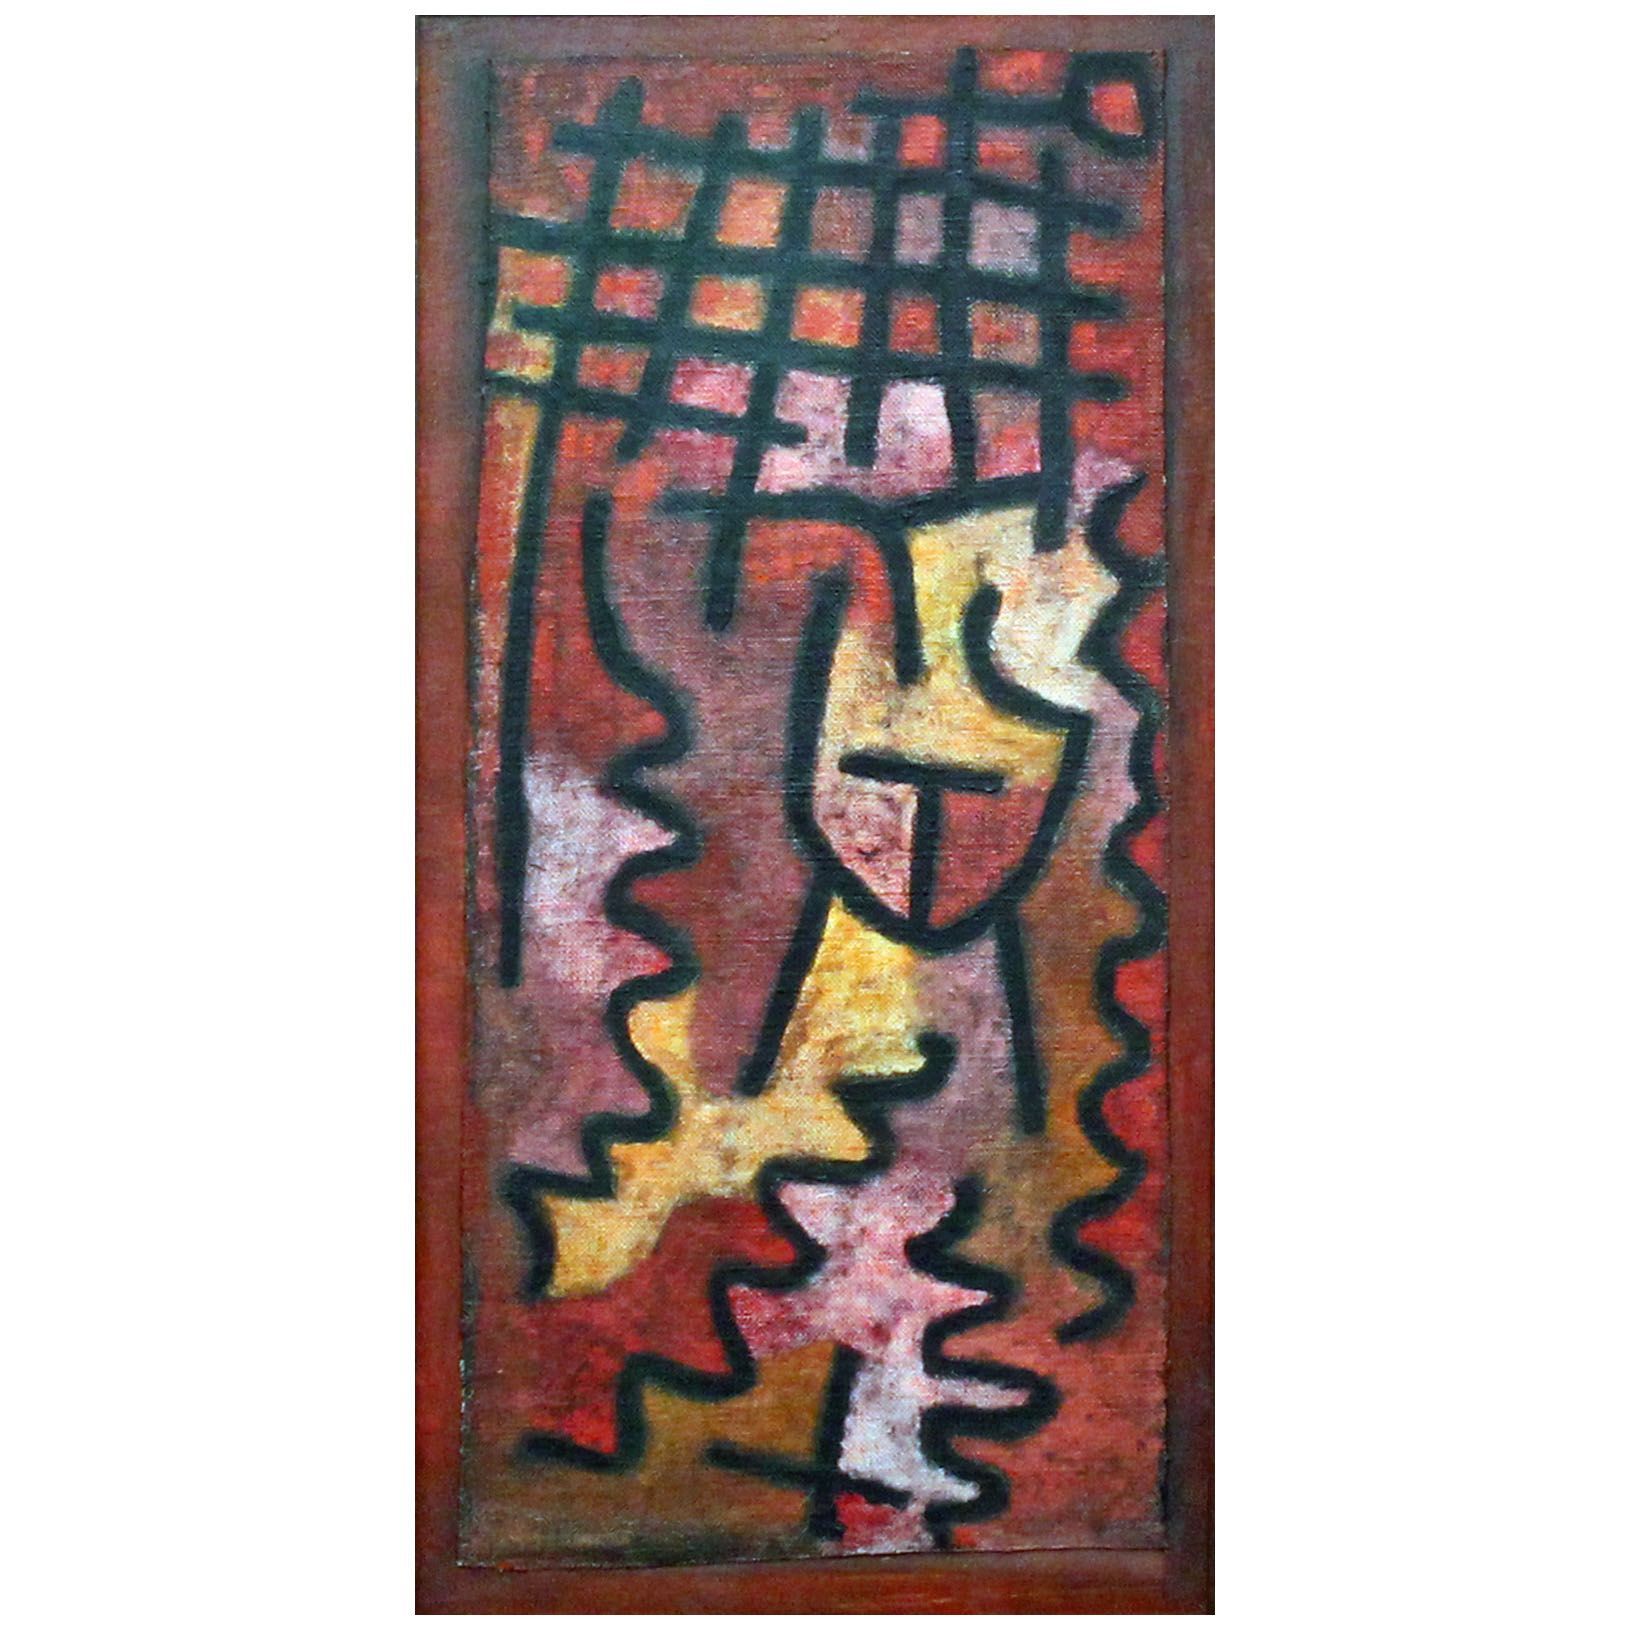 Paul Klee. Ohne Titel. 1939. Zentrum Paul Klee, Bern